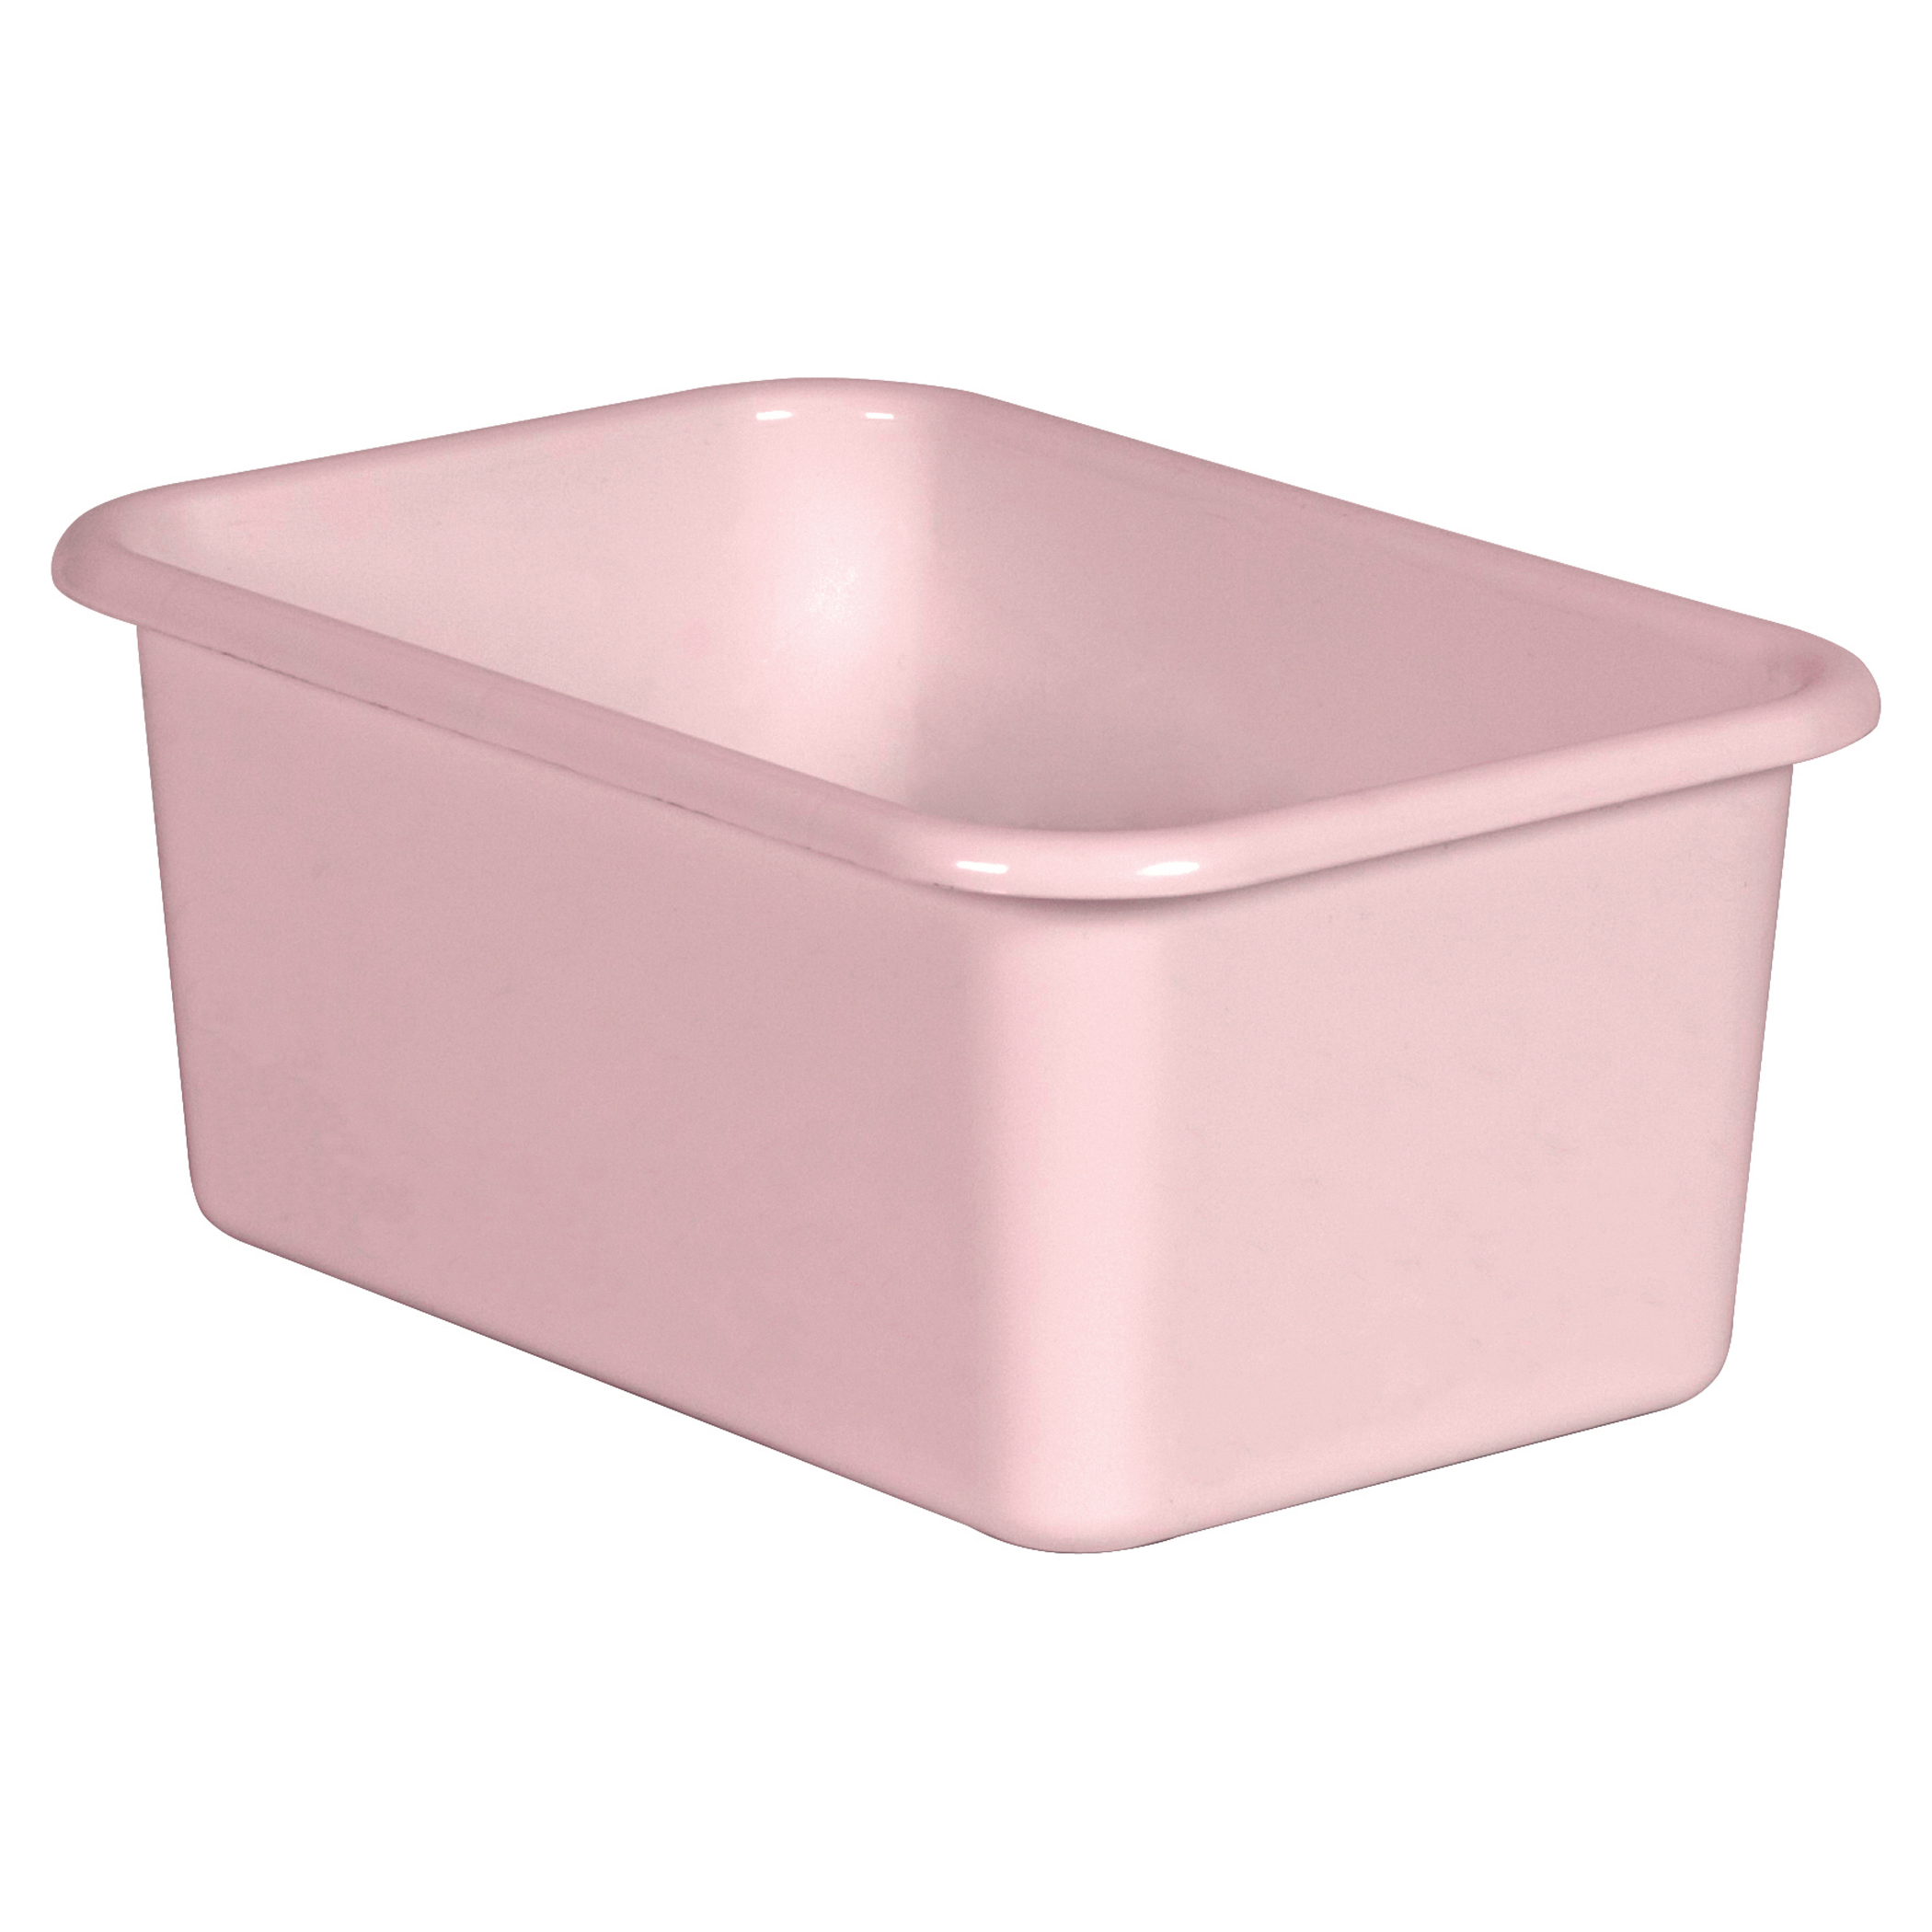 The Teachers' Lounge®  Pink Large Plastic Storage Bin